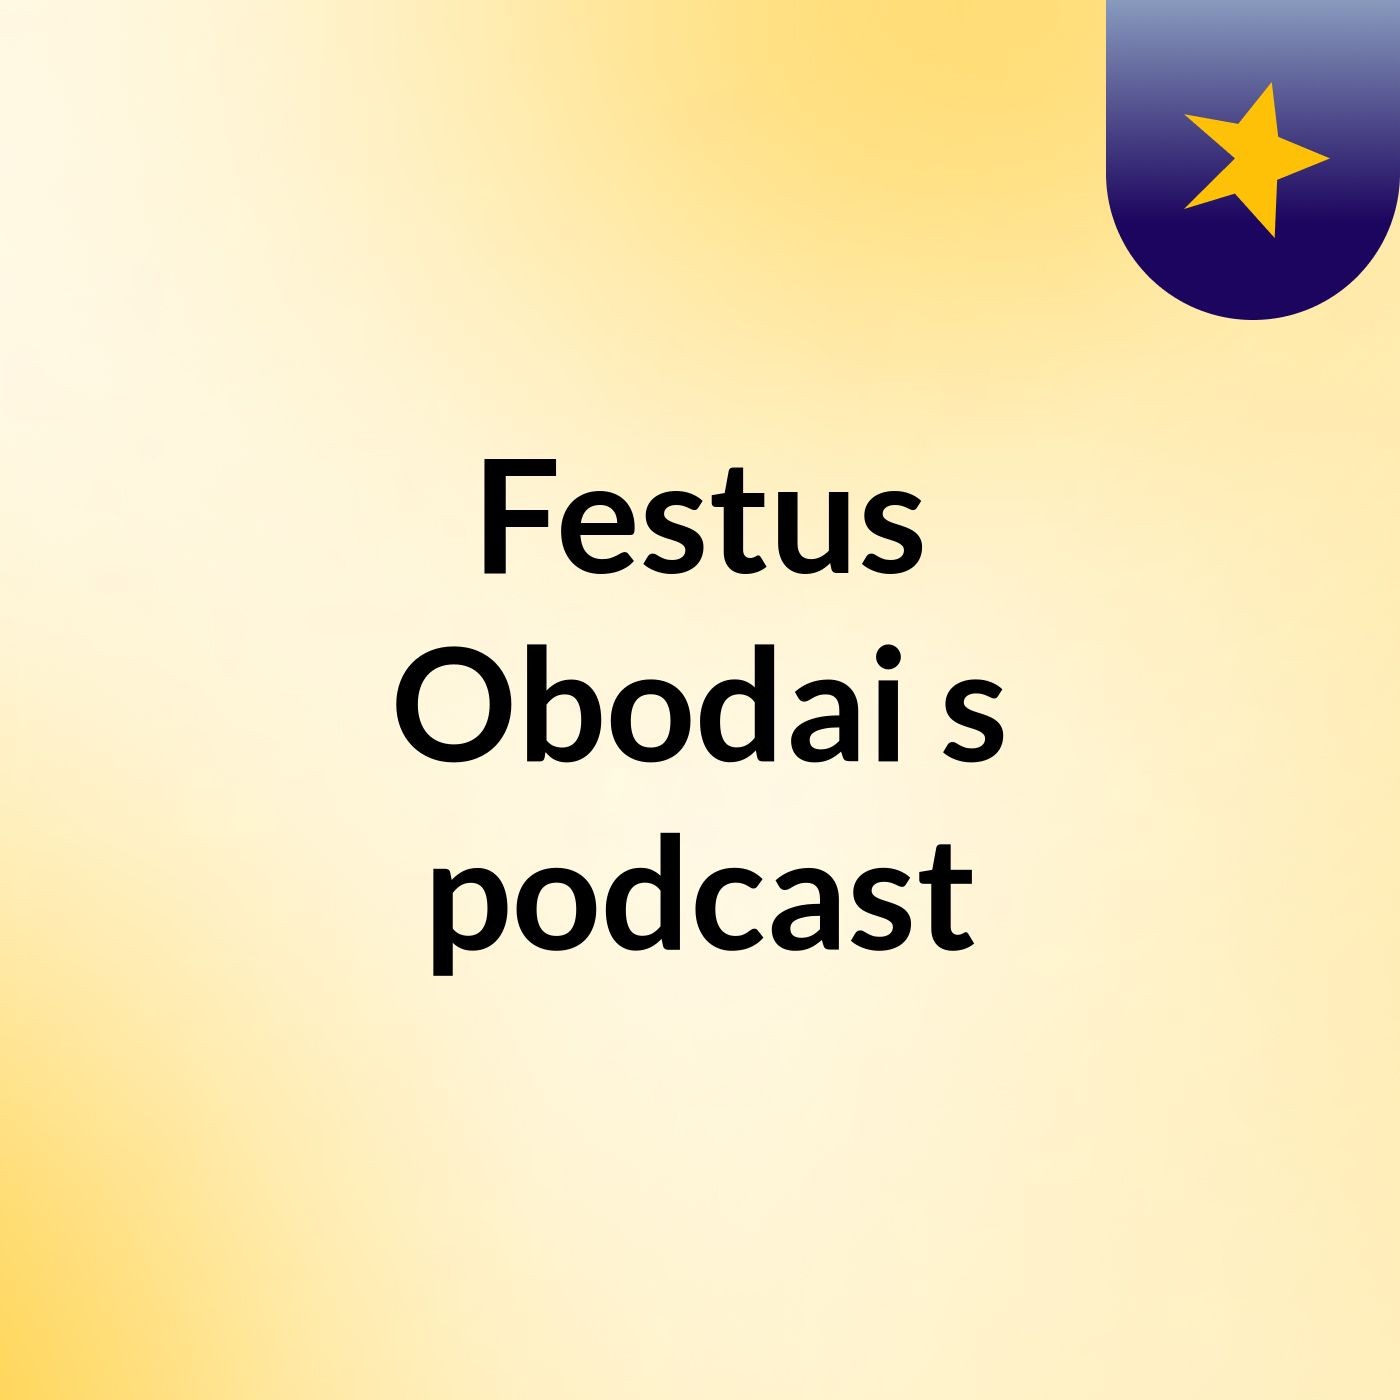 Festus Obodai's podcast